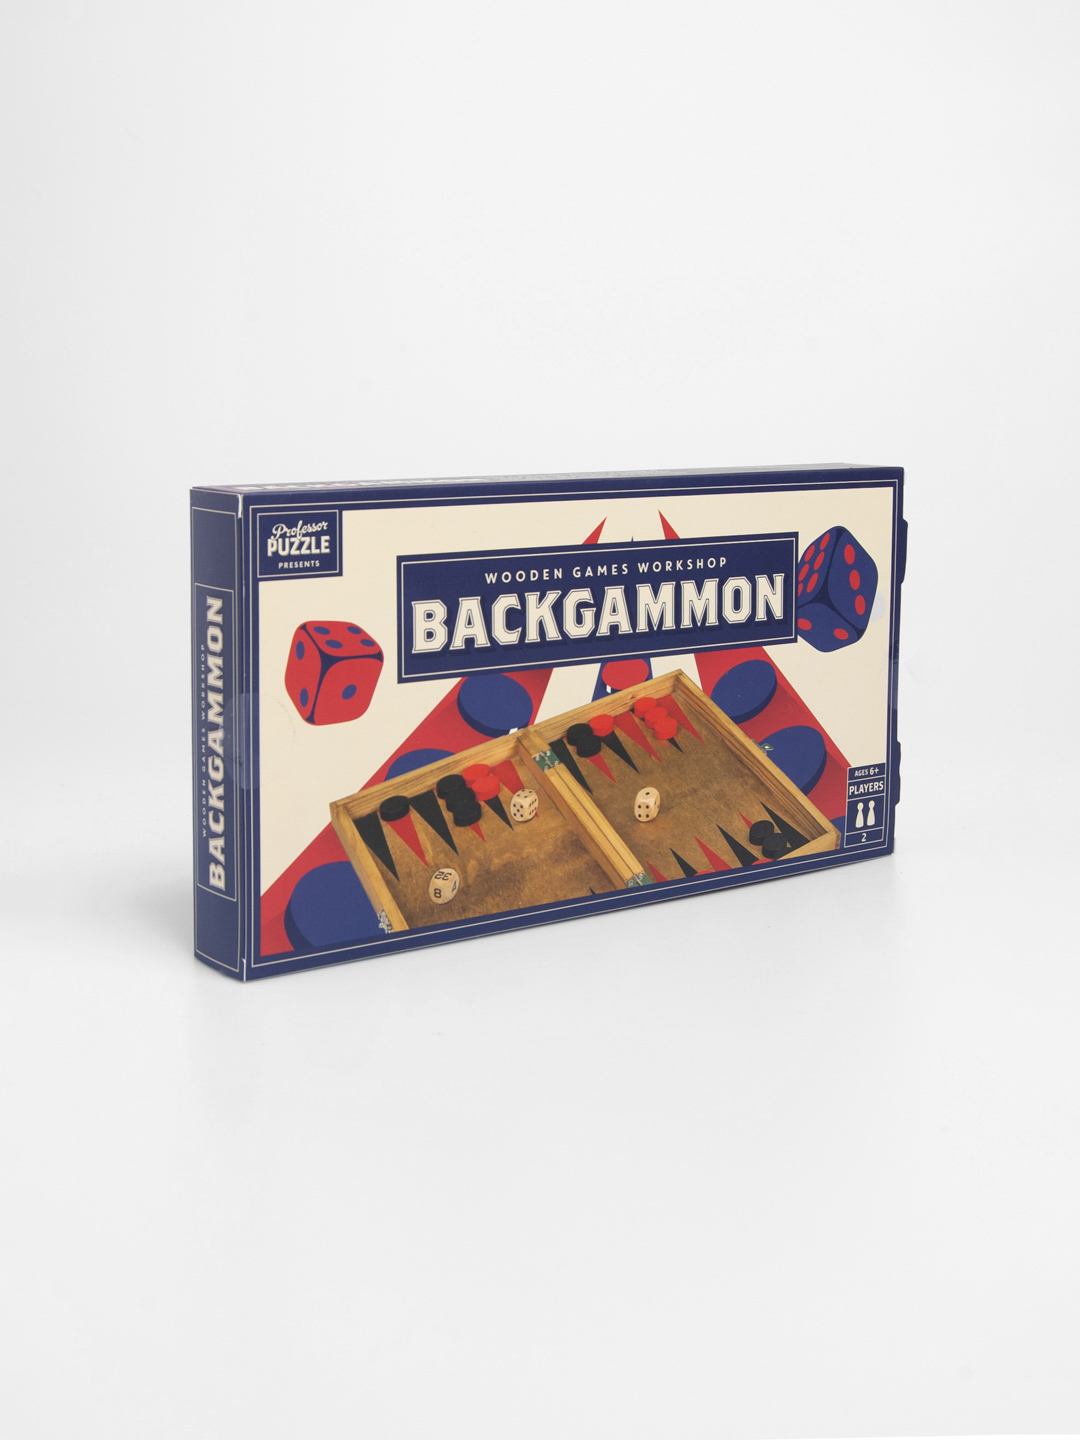 Bridge, Schapsen(66), Belote, Backgammon, Sergeant Moajor (3-5-8), Domino,  Ludo and more games.